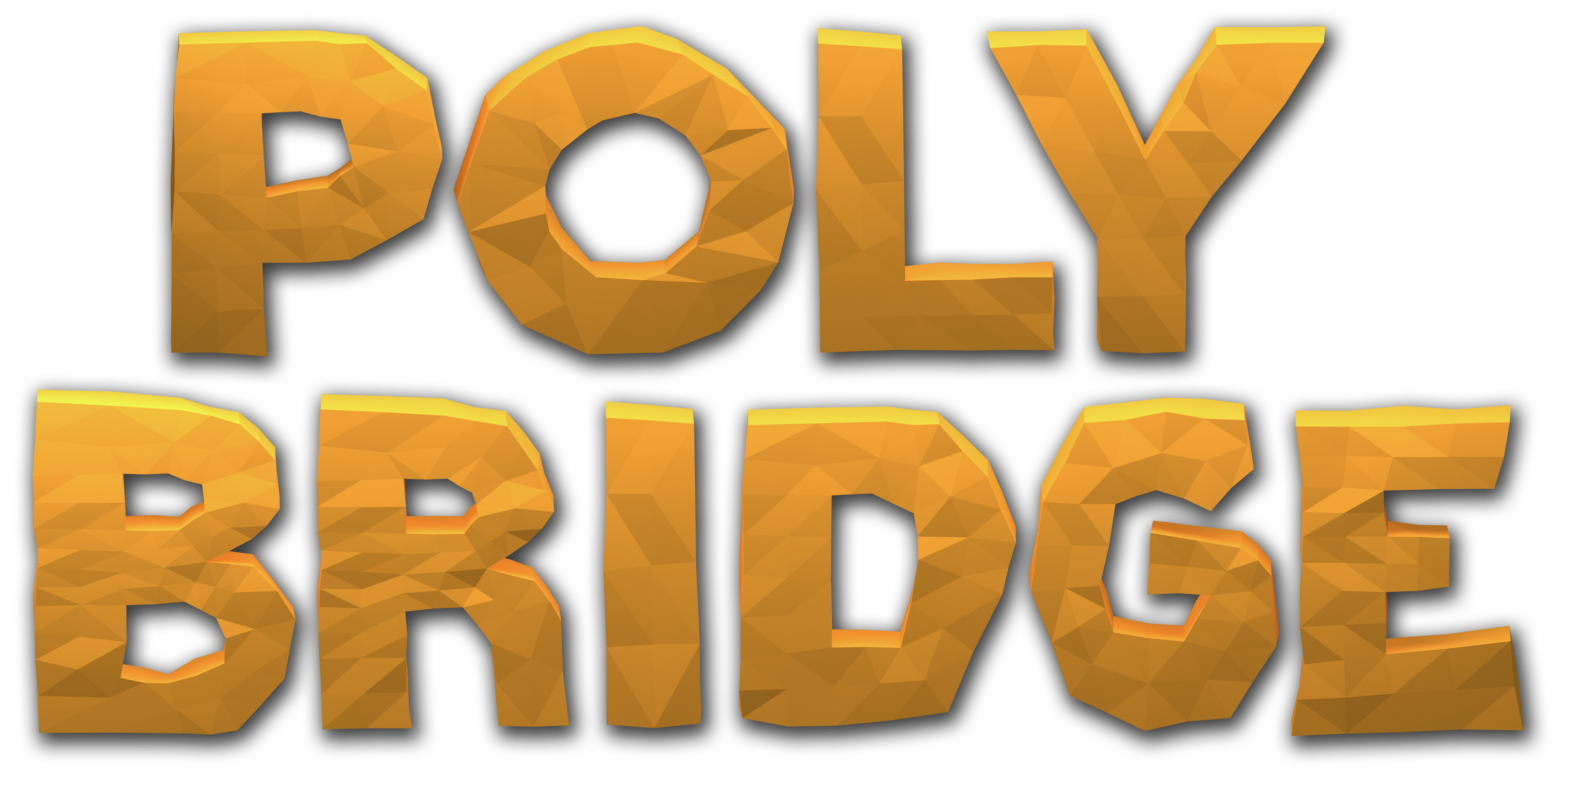 poly bridge 2 browser